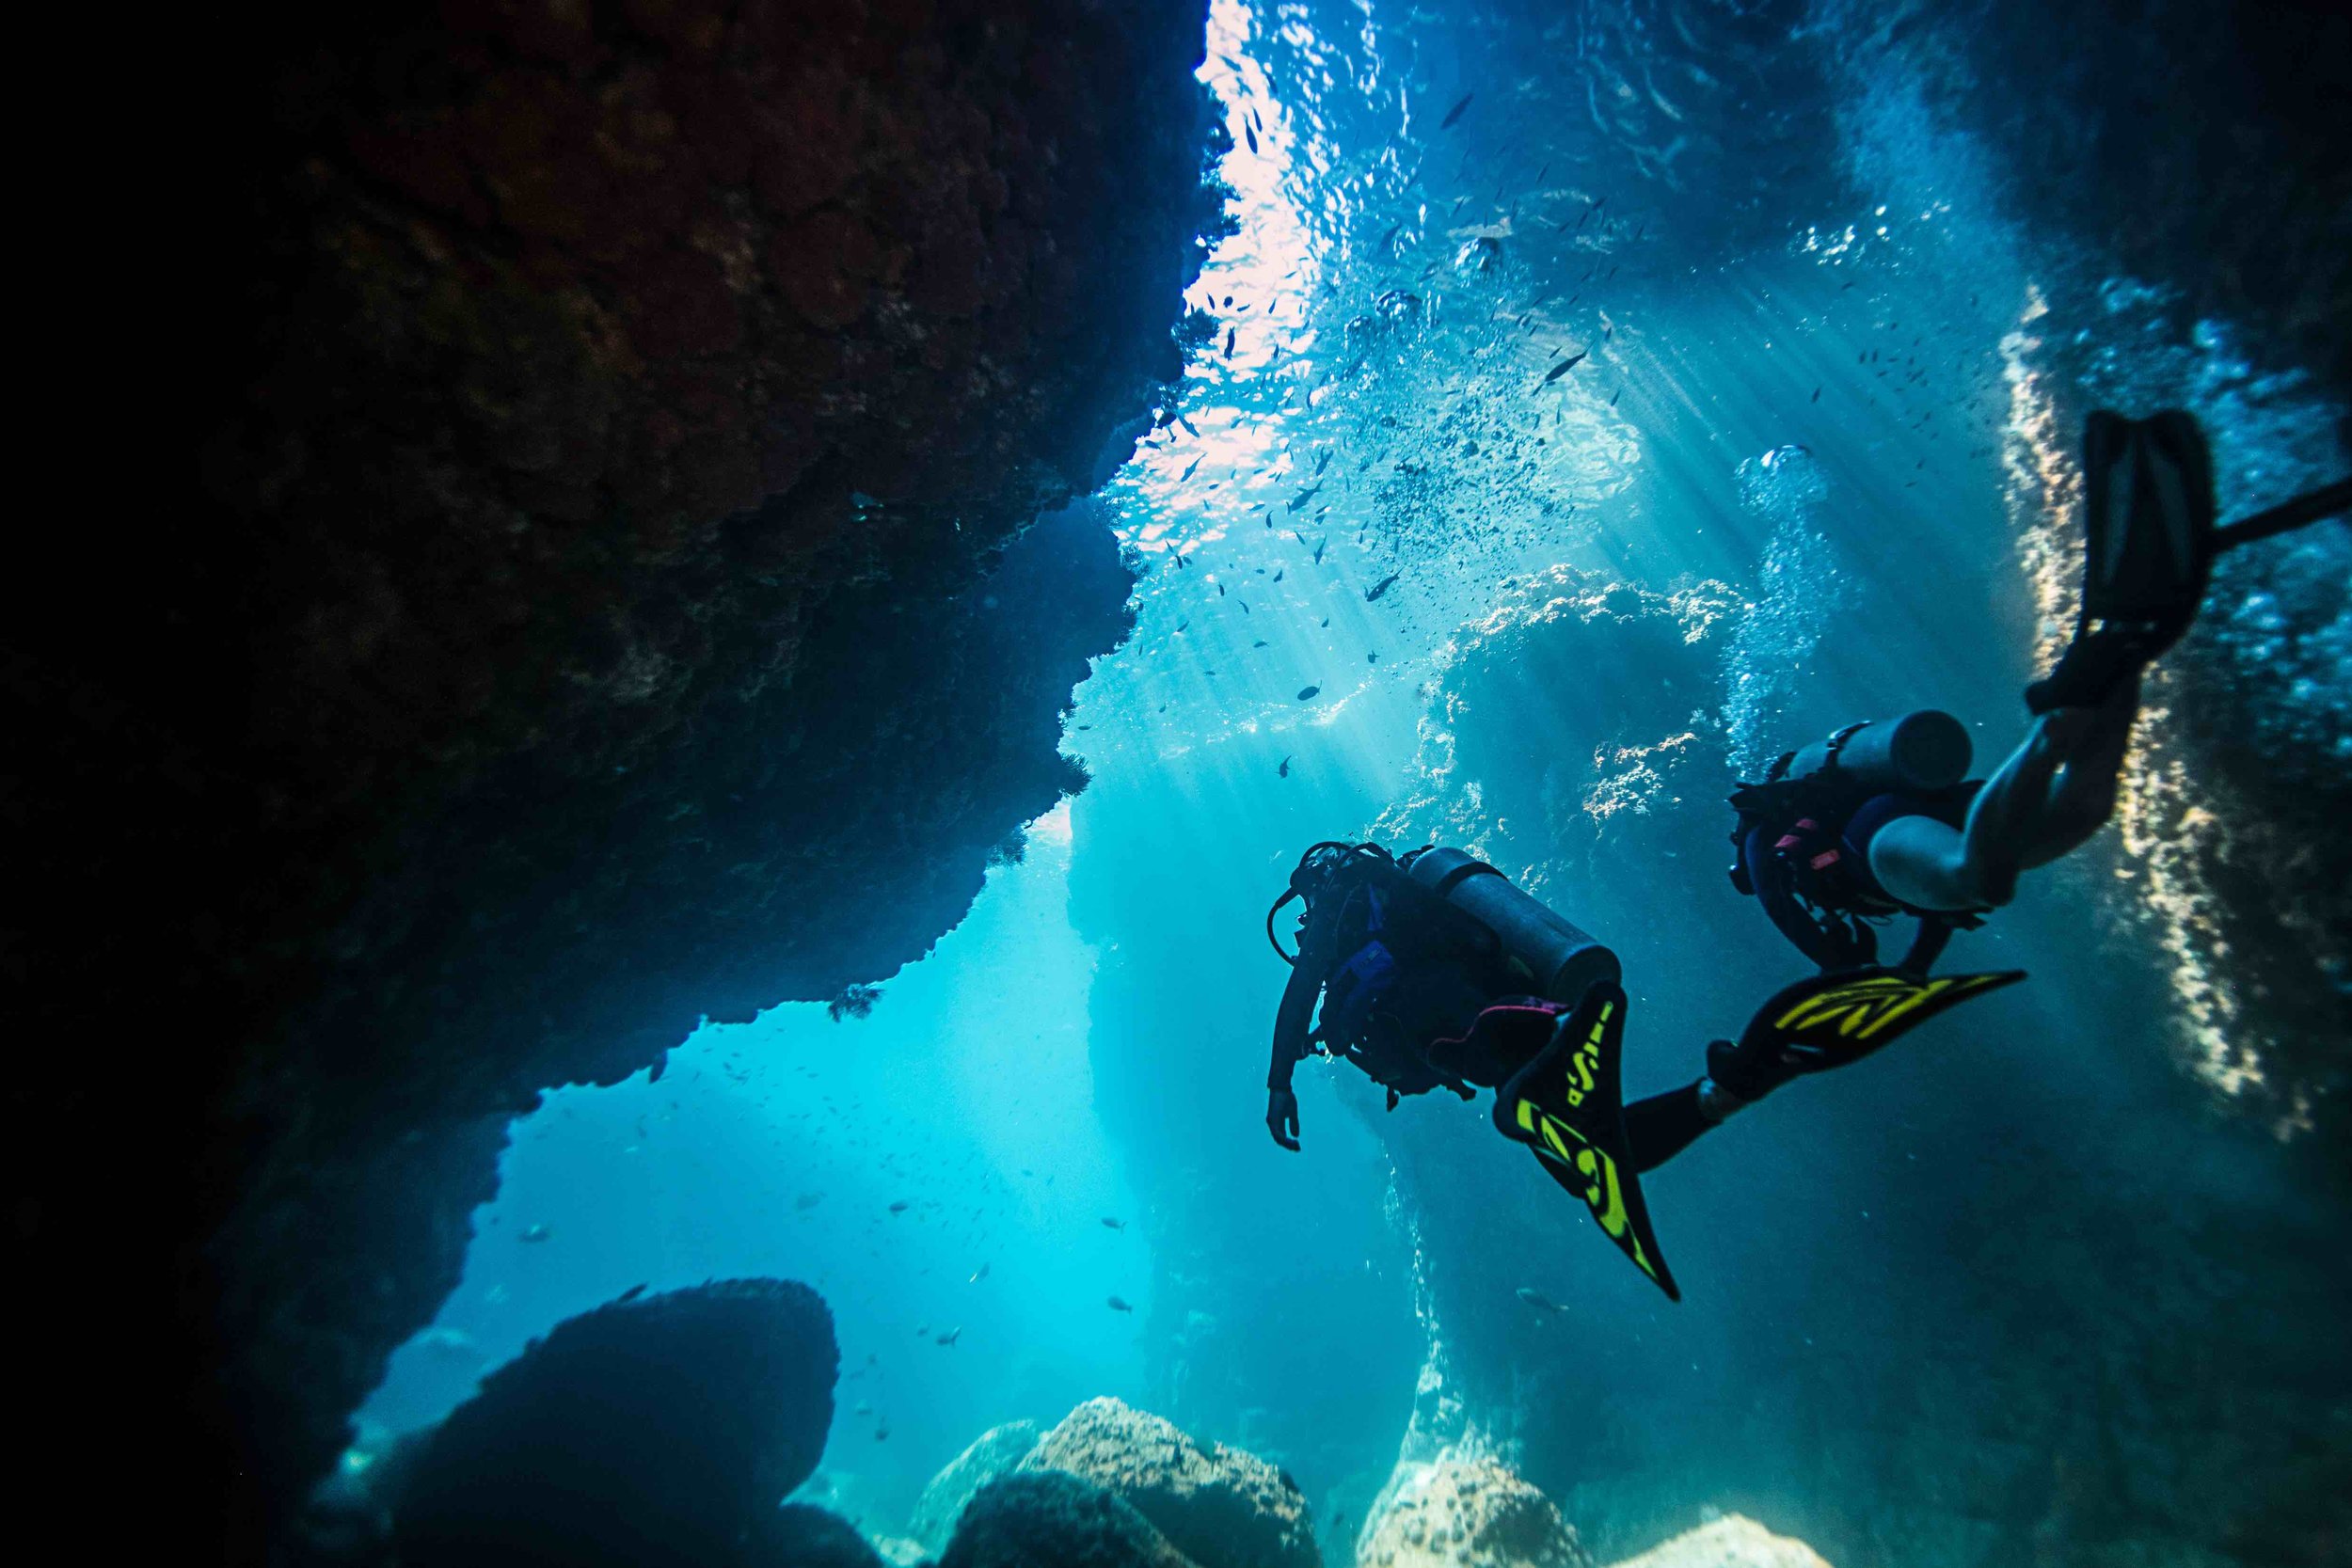 5 Reasons Every Woman Should Get Certified to Scuba Dive // www.readysetjetset.com #travel #diving #scubadiving #beaches #ocean #readysetjetset